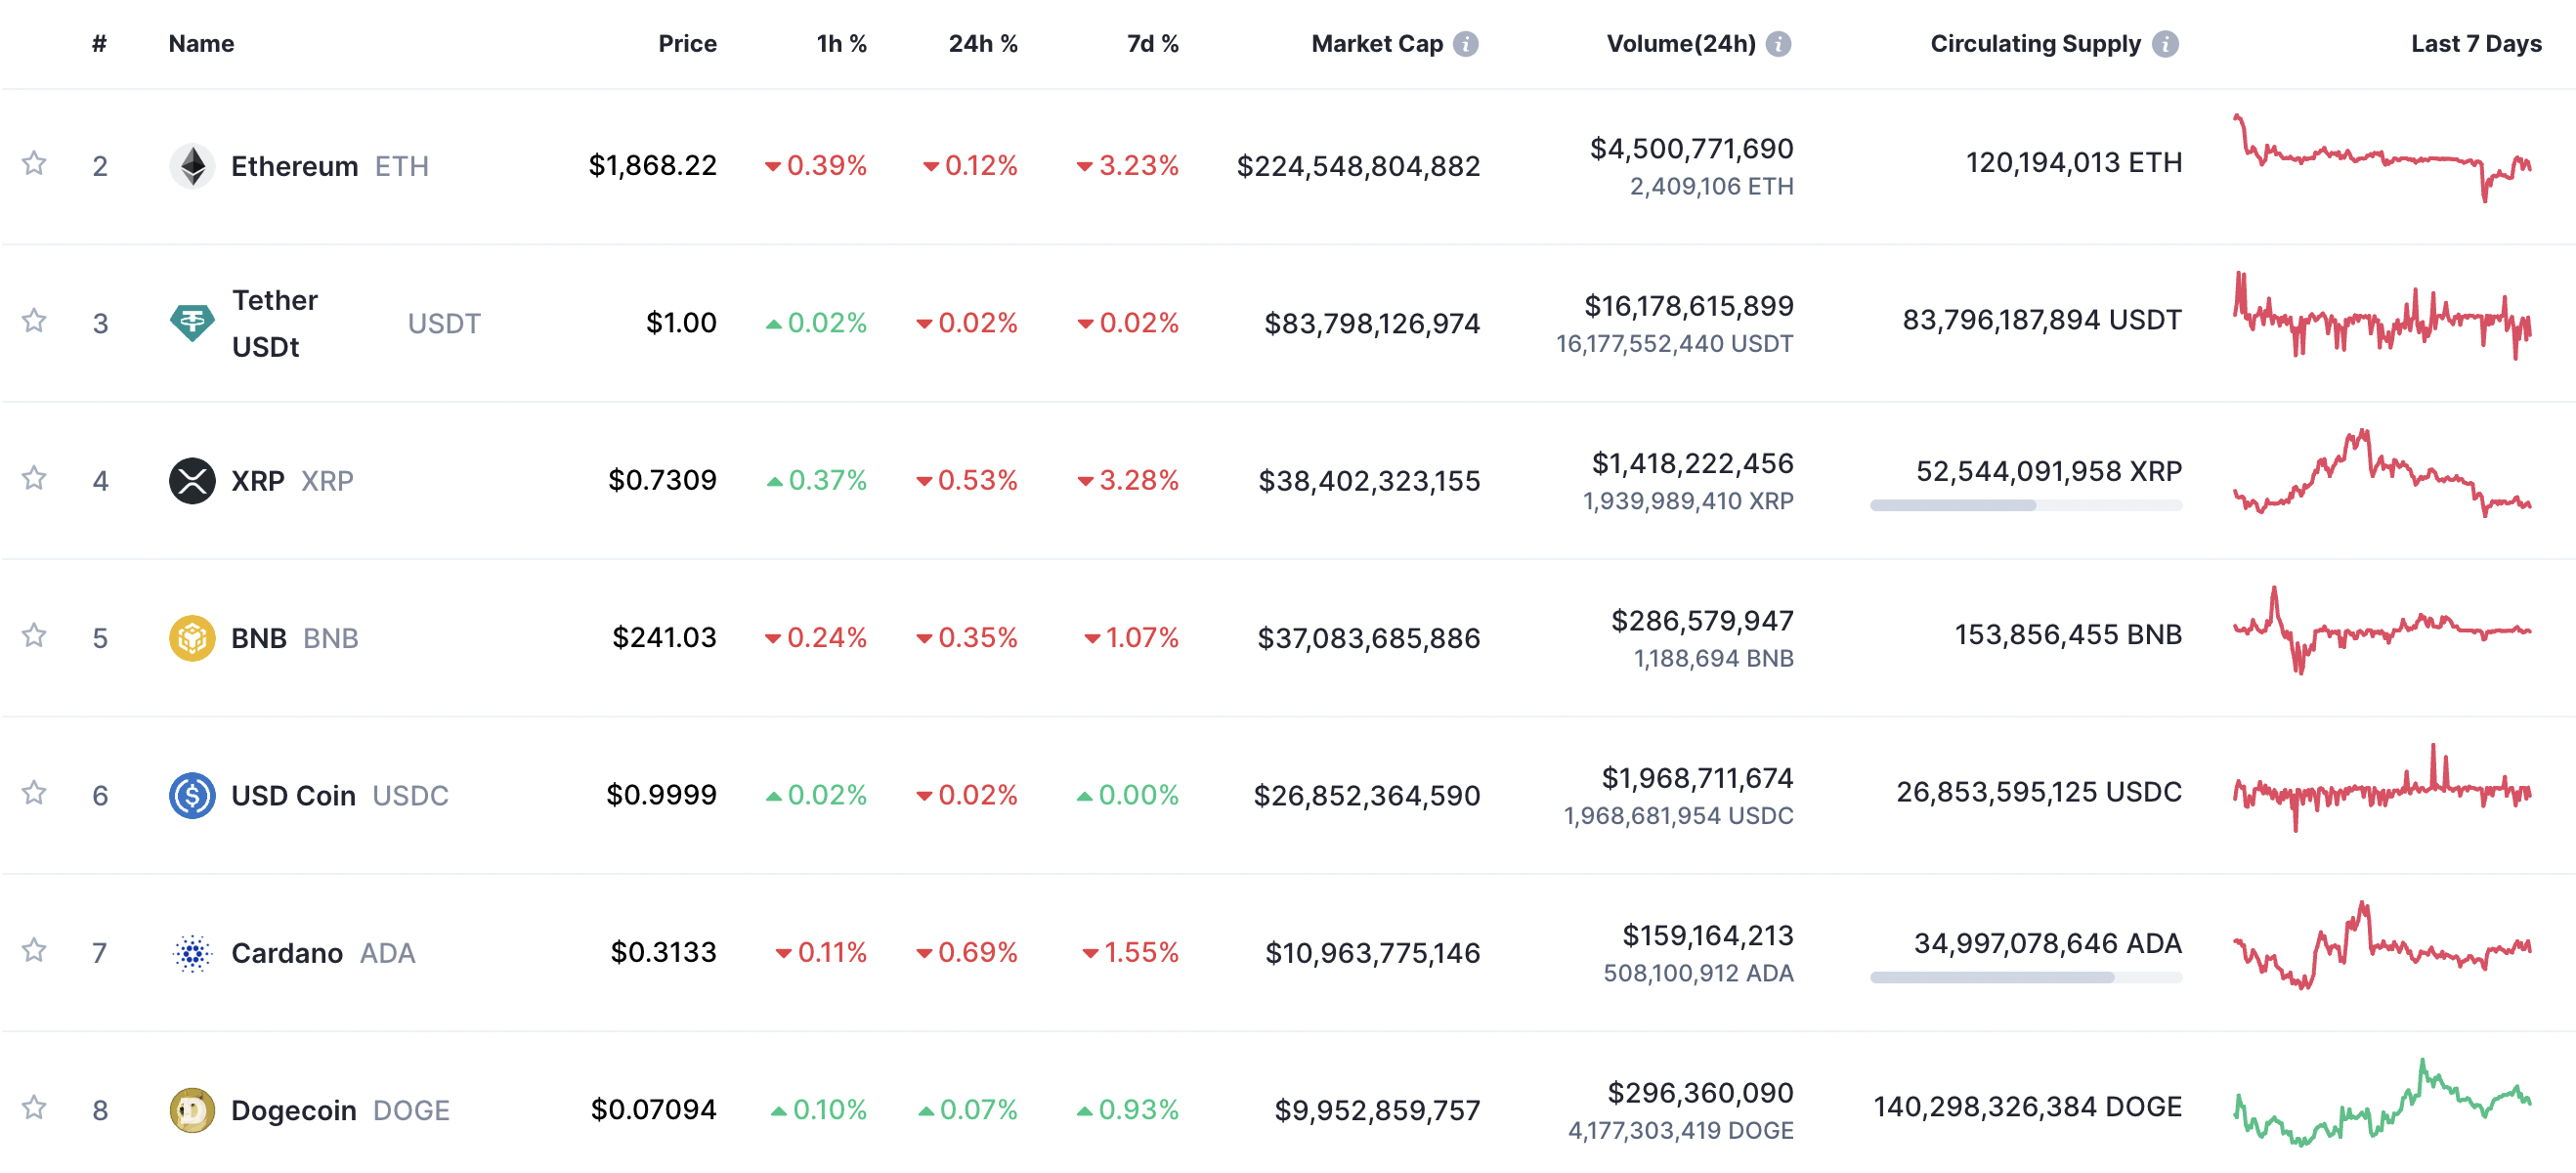 Top cryptocurrencies by market cap